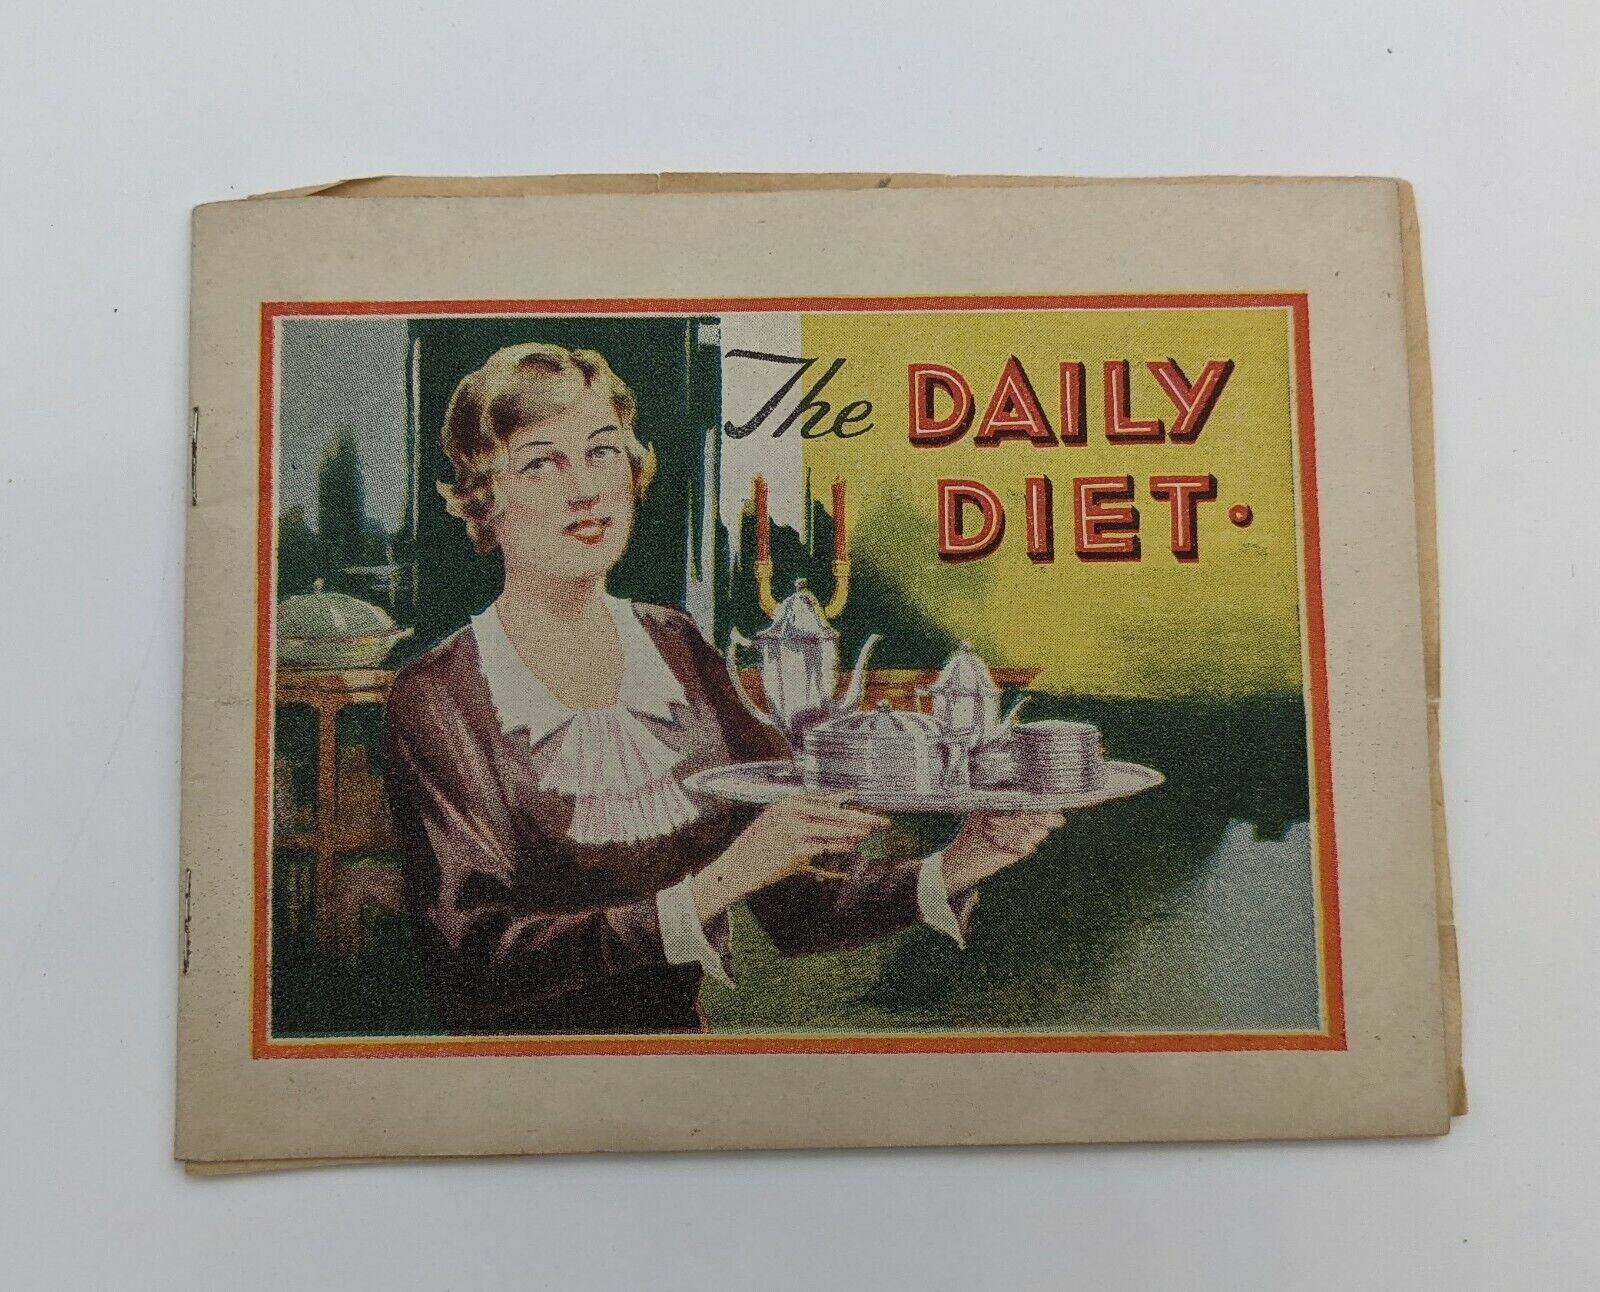 Vintage Alka-Seltzer: The Daily Diet Promotional Antique Advertisement Booklet